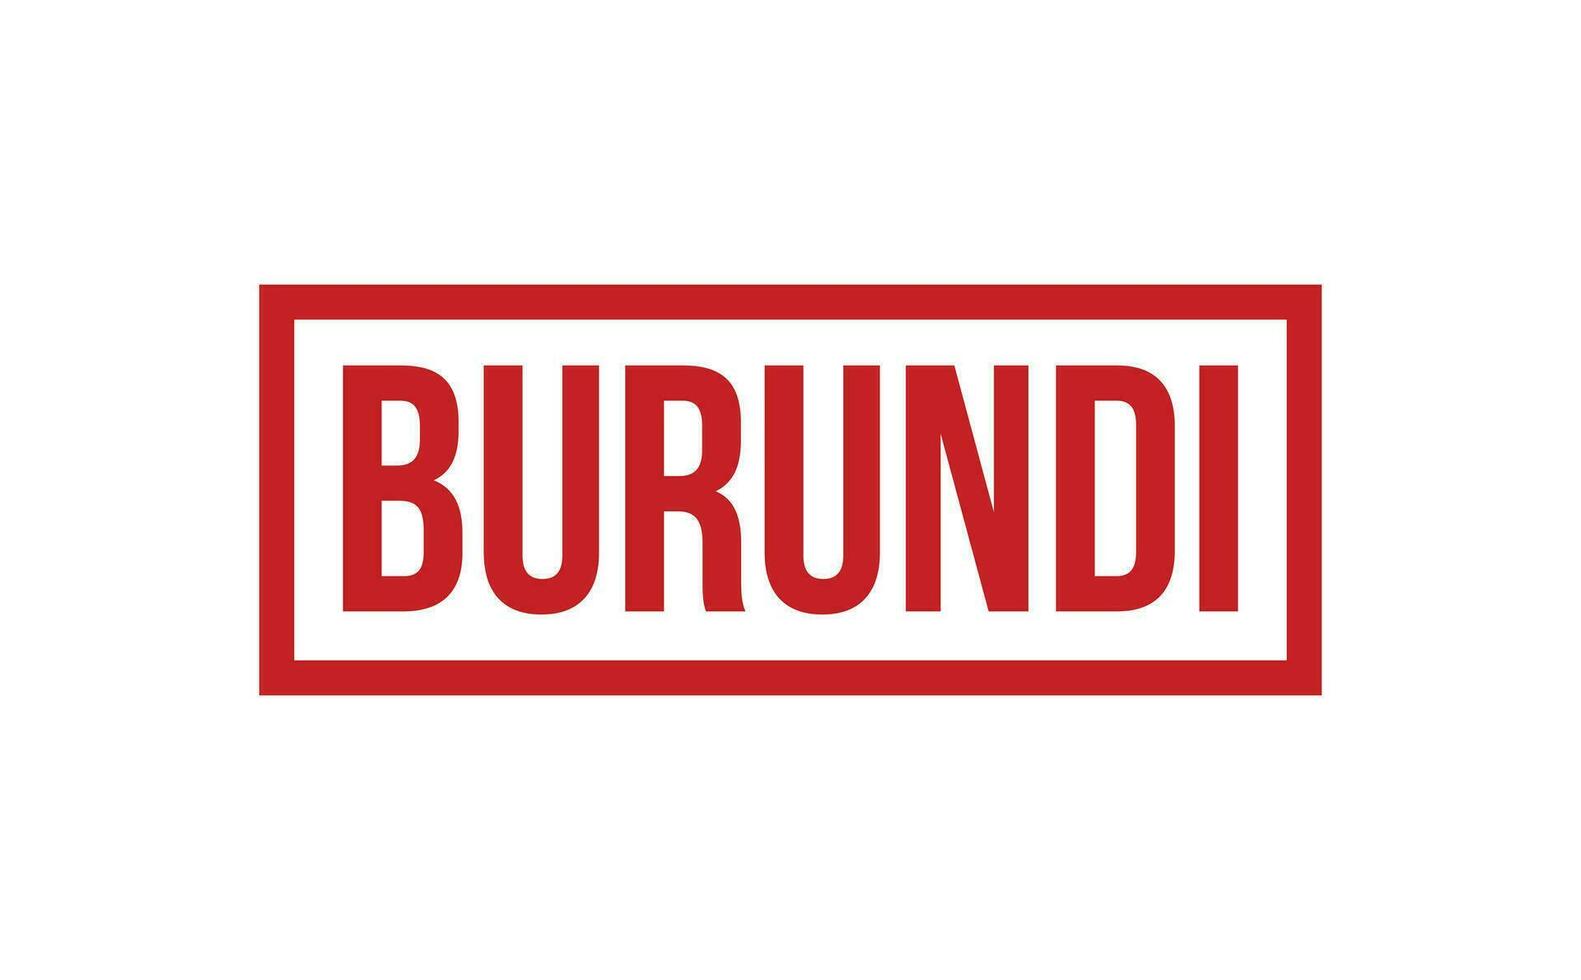 Burundi Rubber Stamp Seal Vector